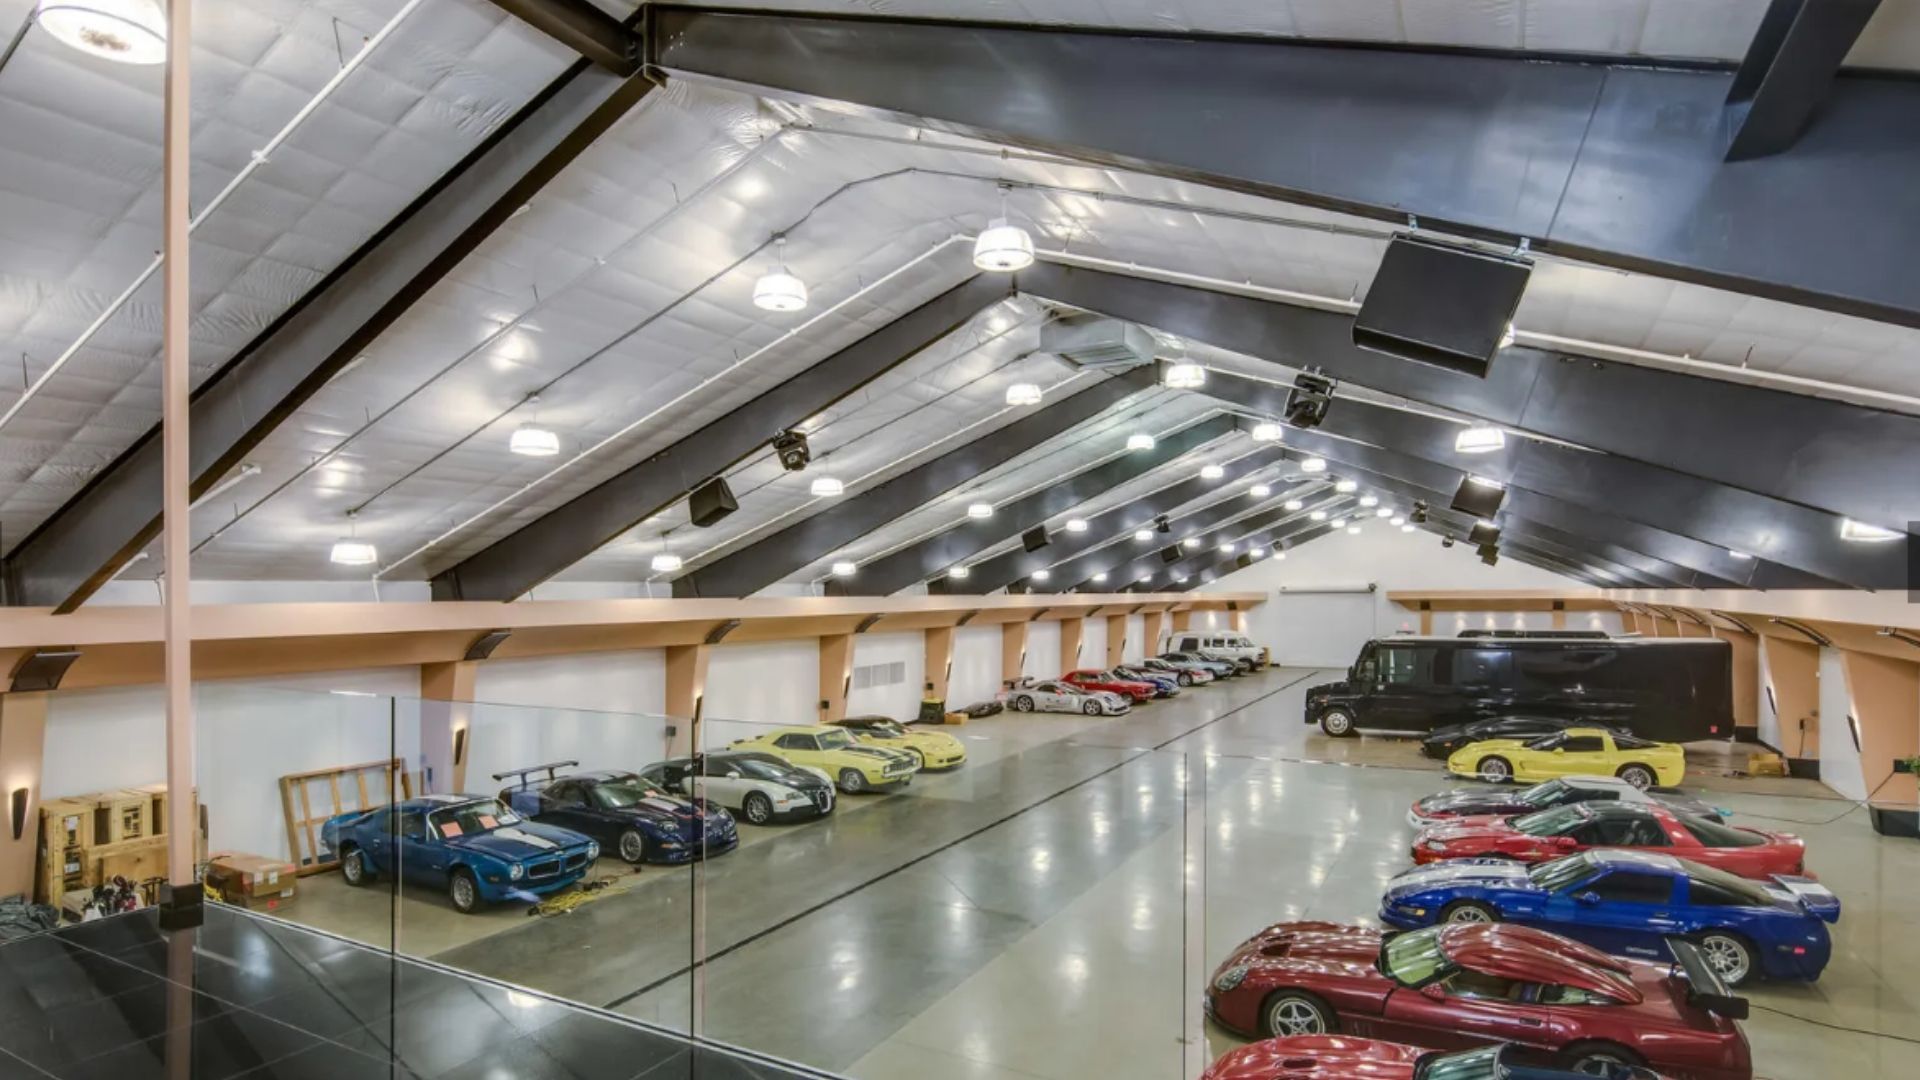 Colorado Mansion For Sale Features A Massive Garage 